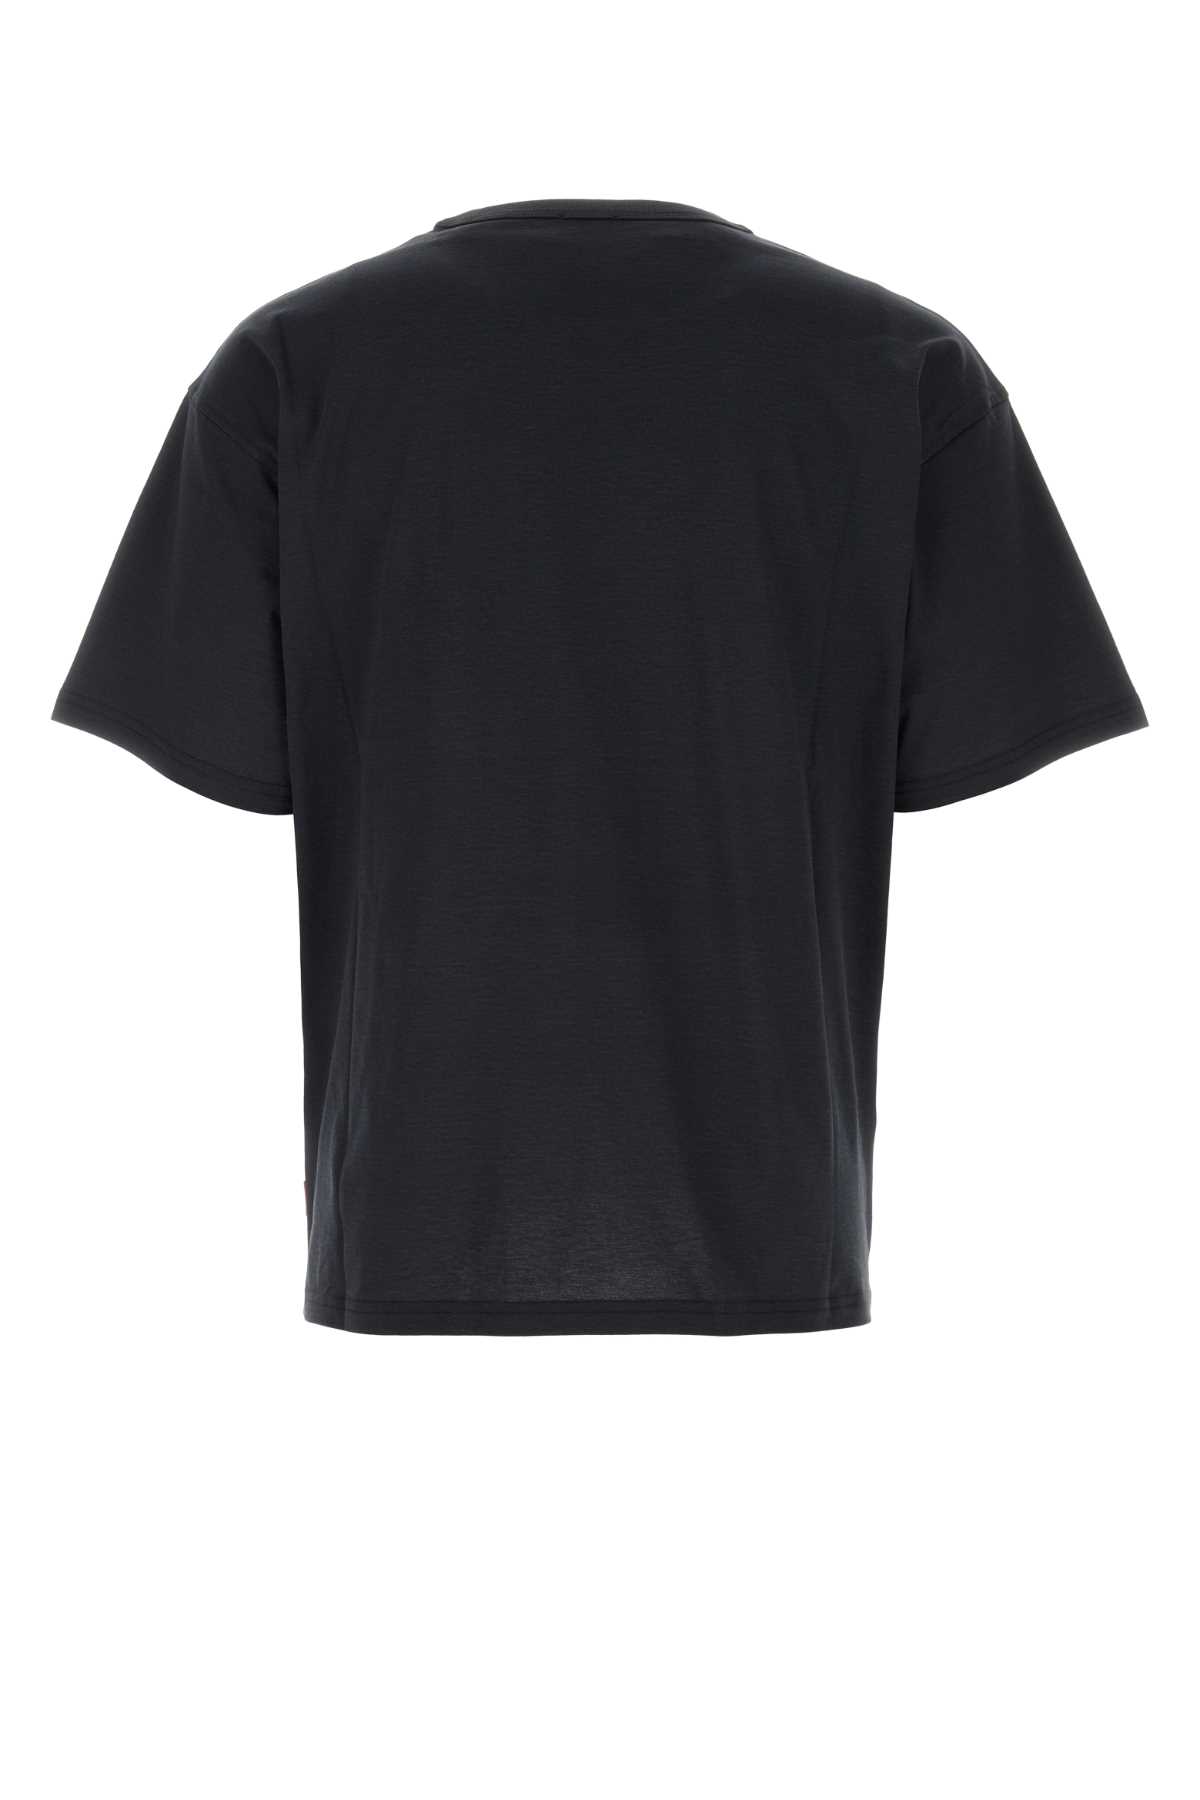 Diesel Black Cotton T-shirt In 9xxa